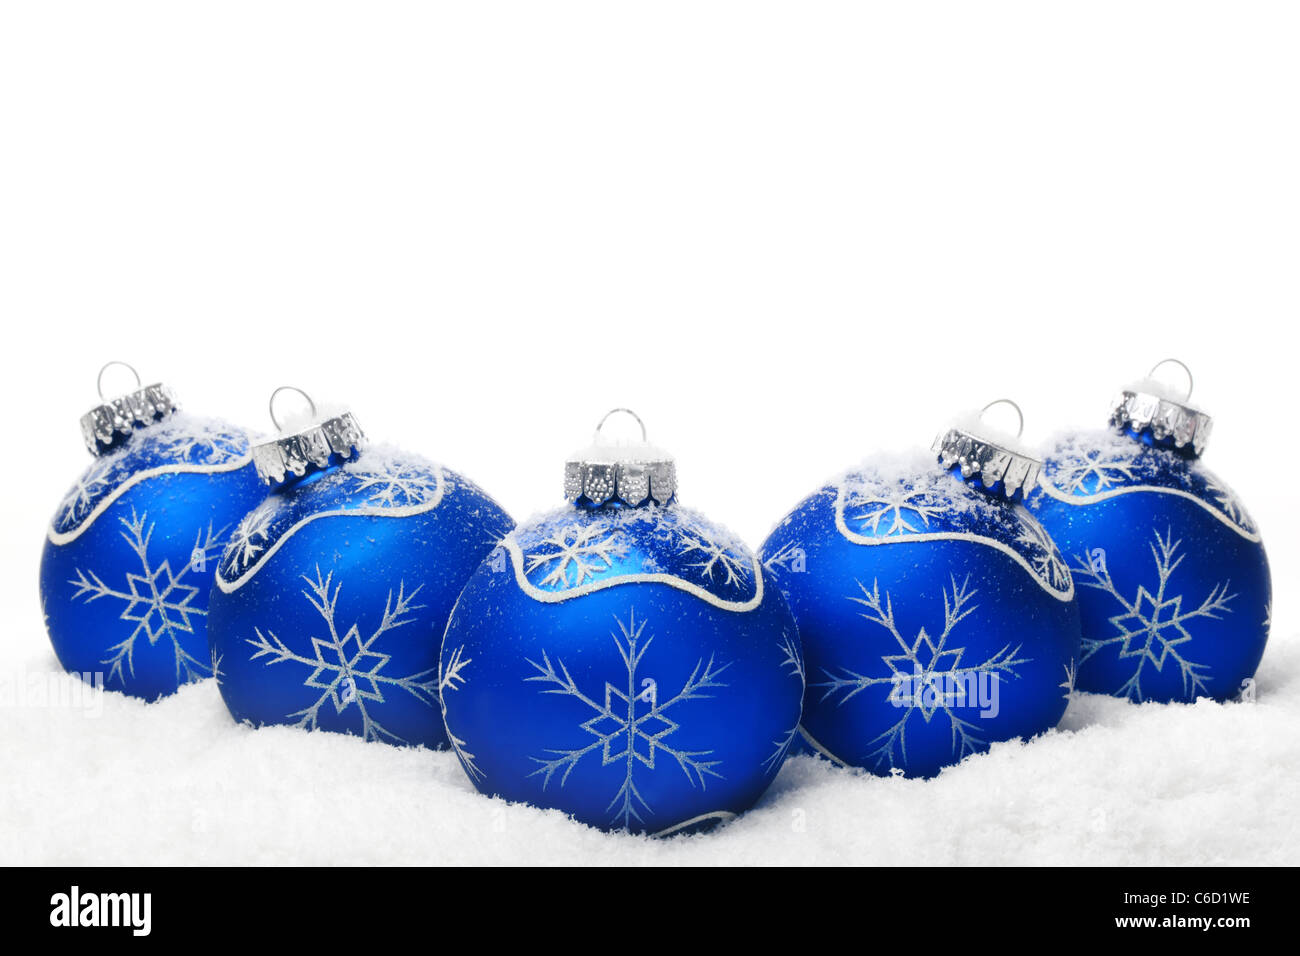 Christmas balls on snow over white background. Stock Photo